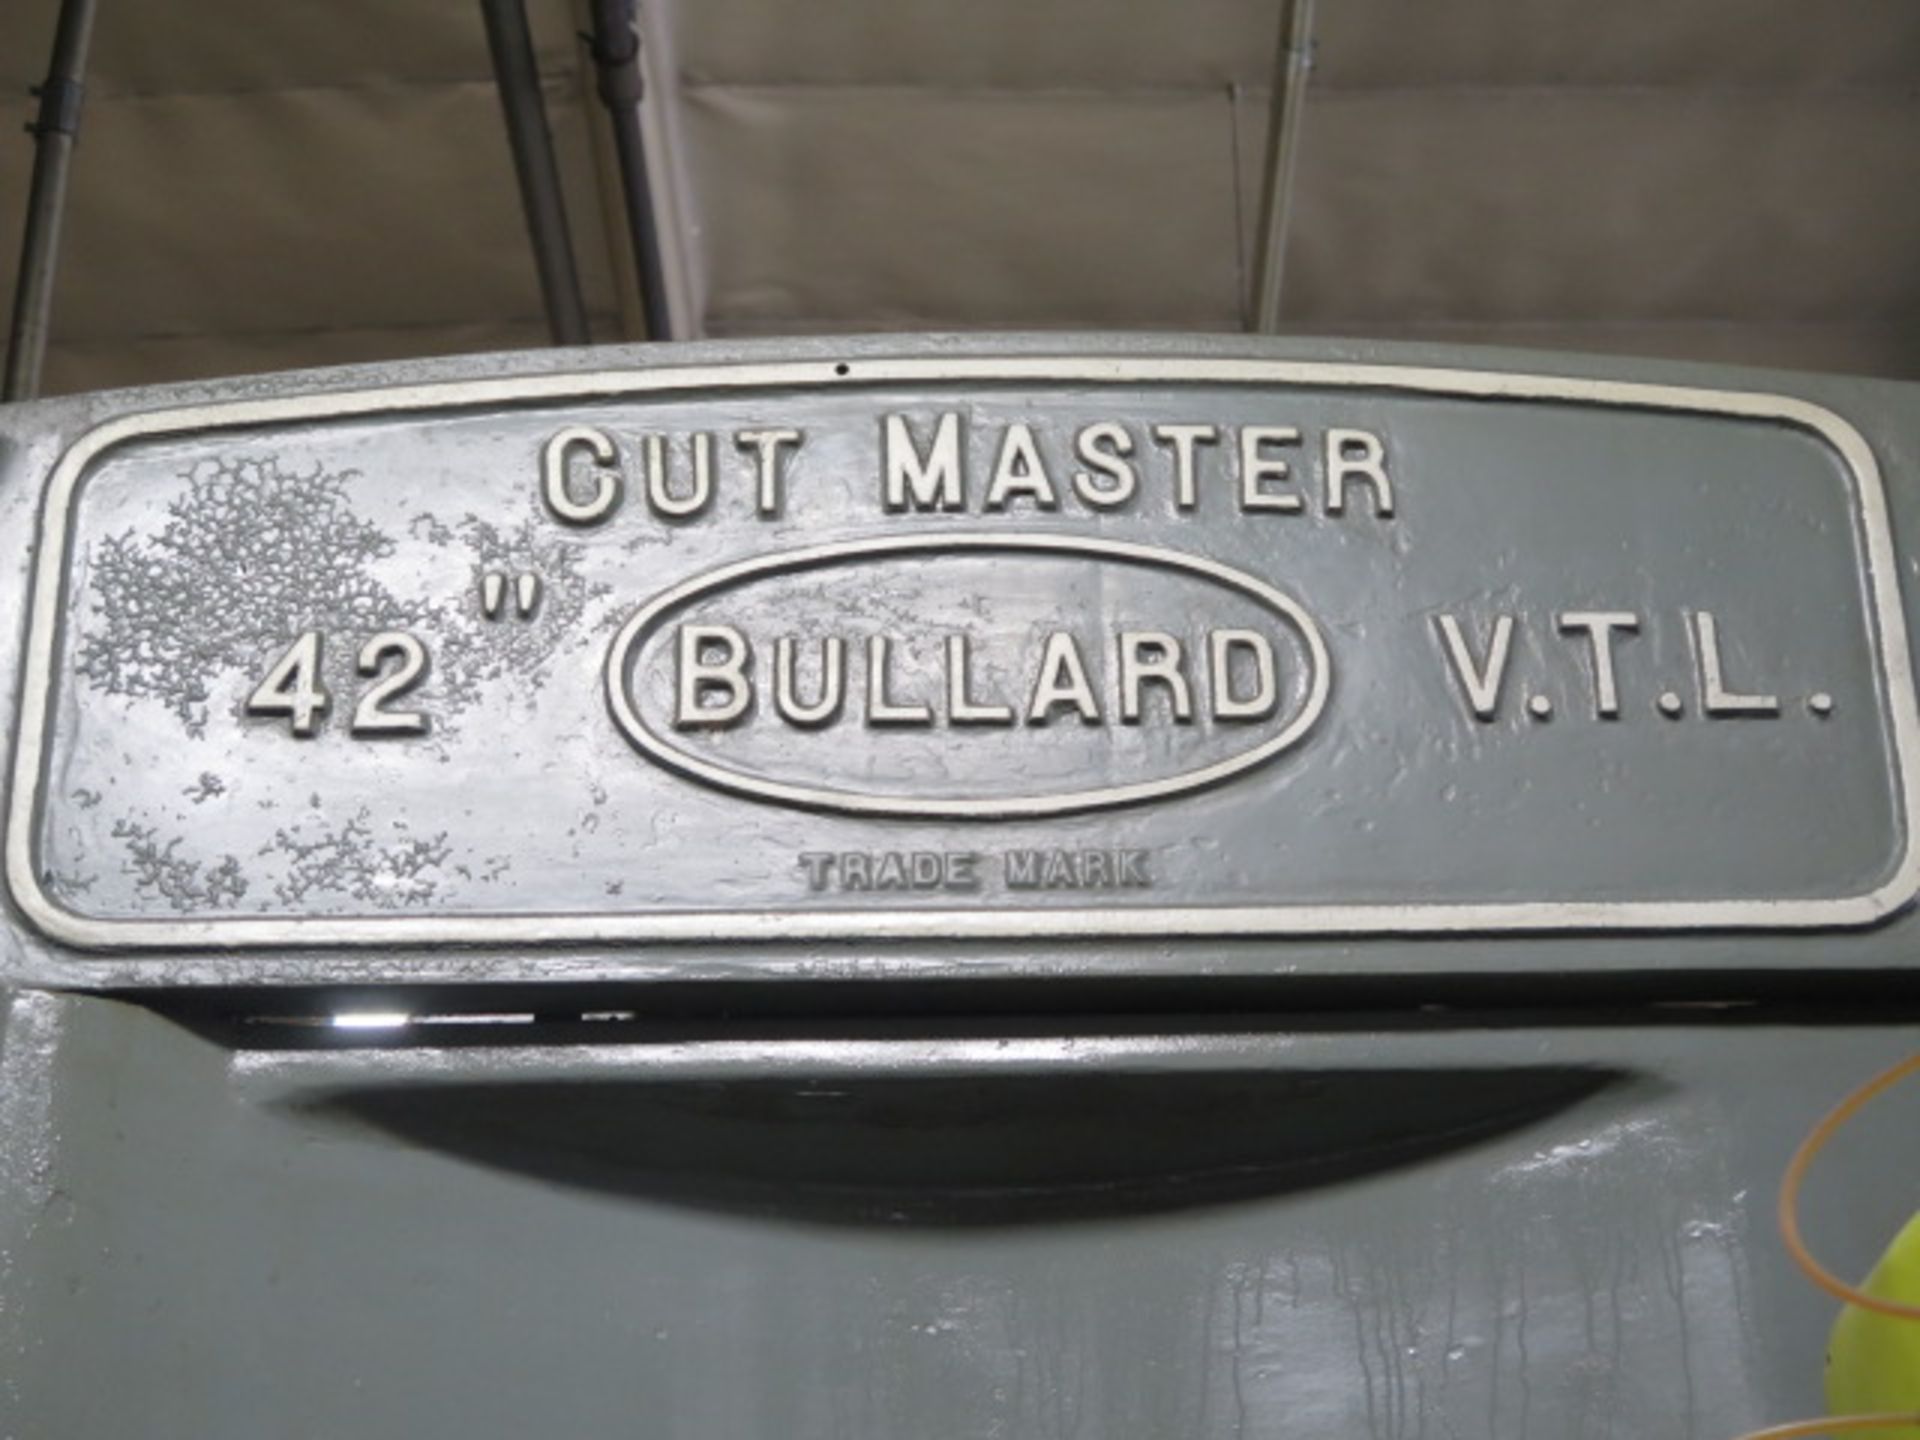 Bullard “Cut Master” 42” Vertical Turret Lathe s/n 28729 w/ Bullard Controls, 56” Swing, SOLD AS IS - Image 13 of 13